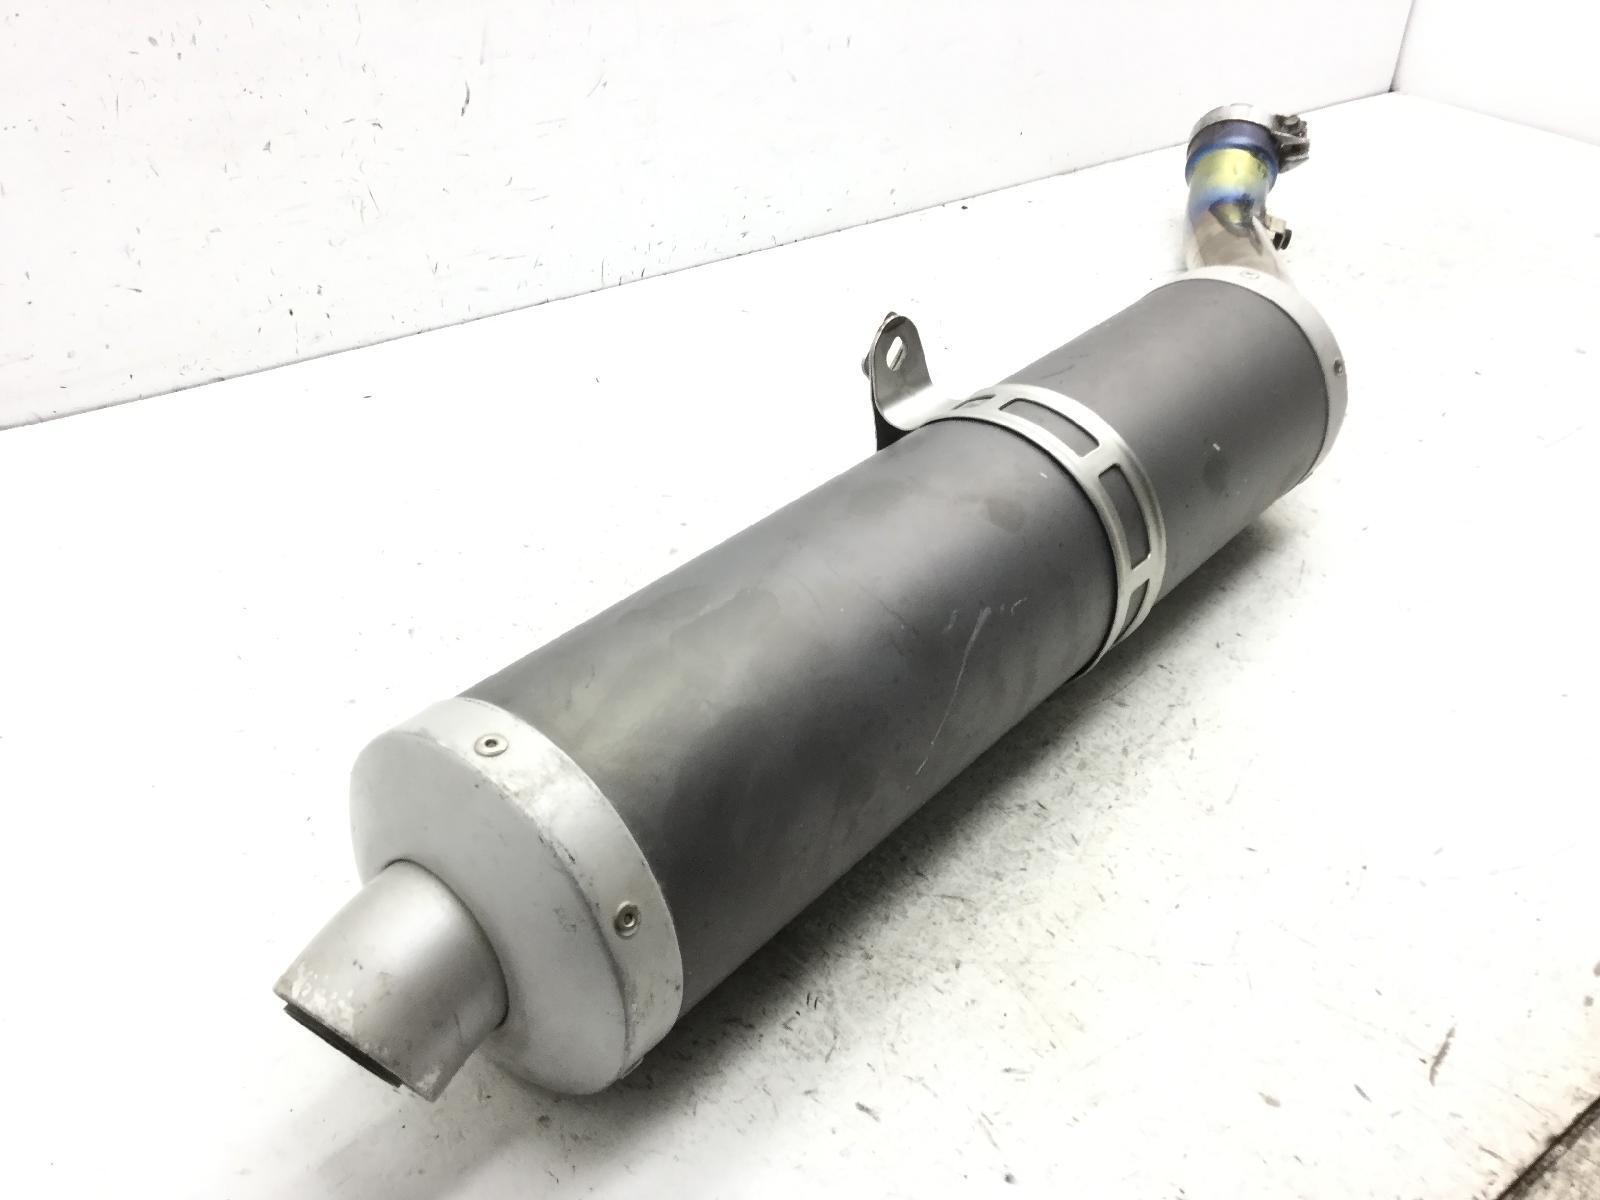 Exhaust Silencer Original Homologated For Use Road YAMAHA YZF R1 1000 2002